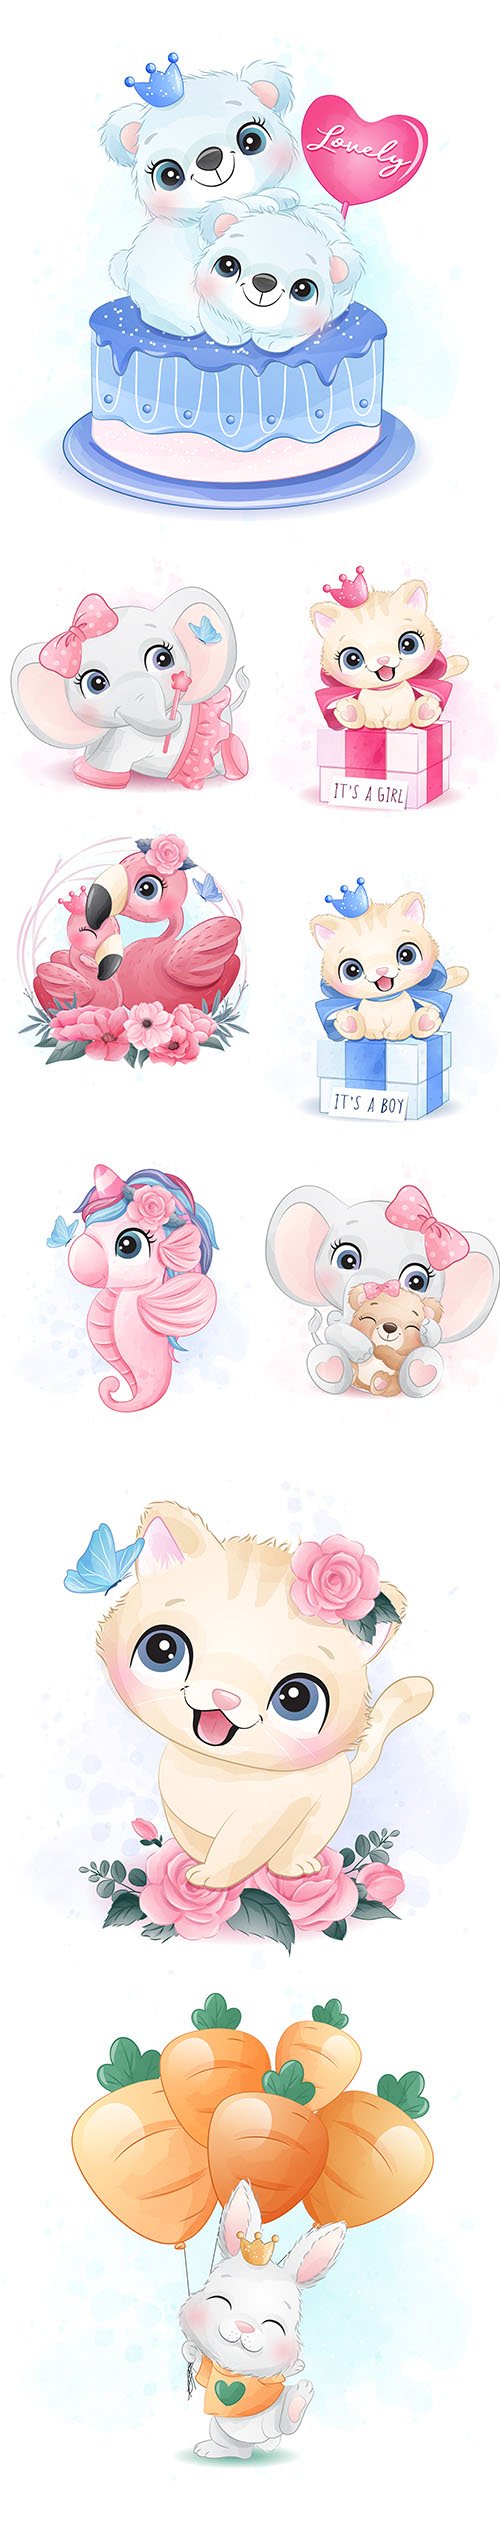 Little Cute Cartoons Animals Illustrations Vol 2